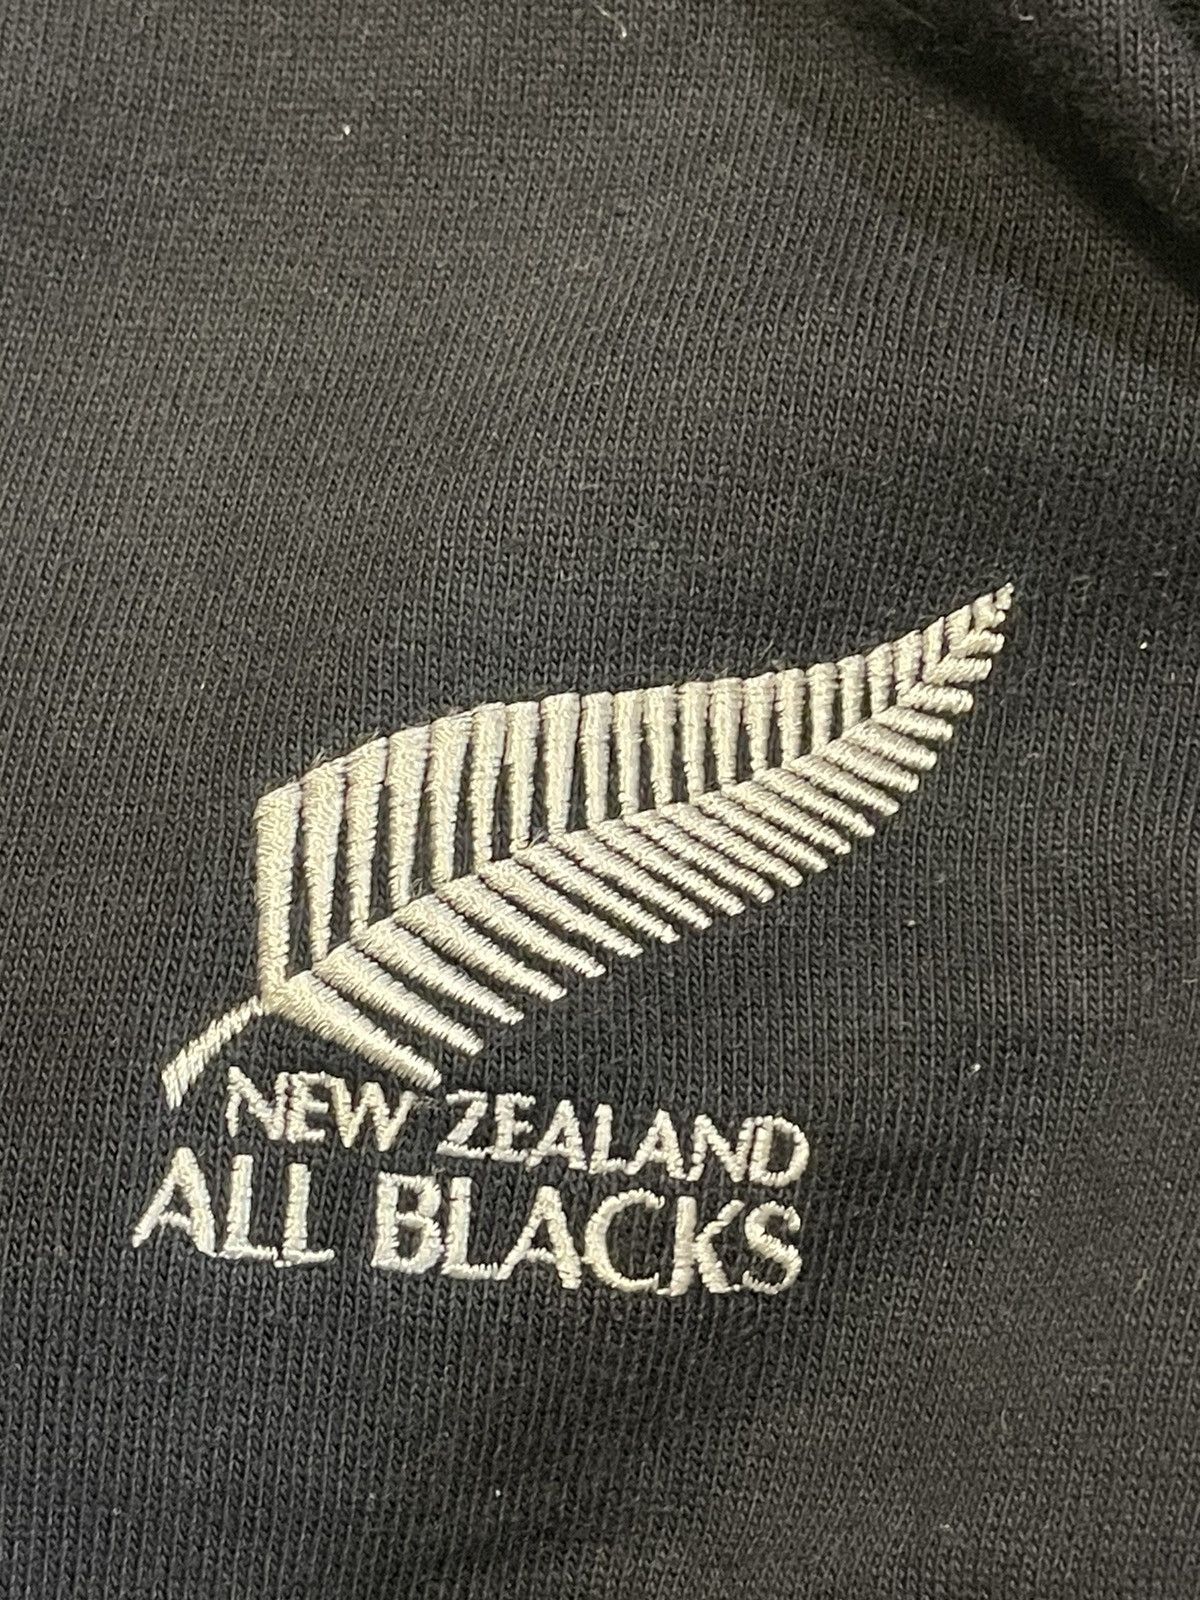 Vintage Canterbury All Black Rugby Shirt - 4